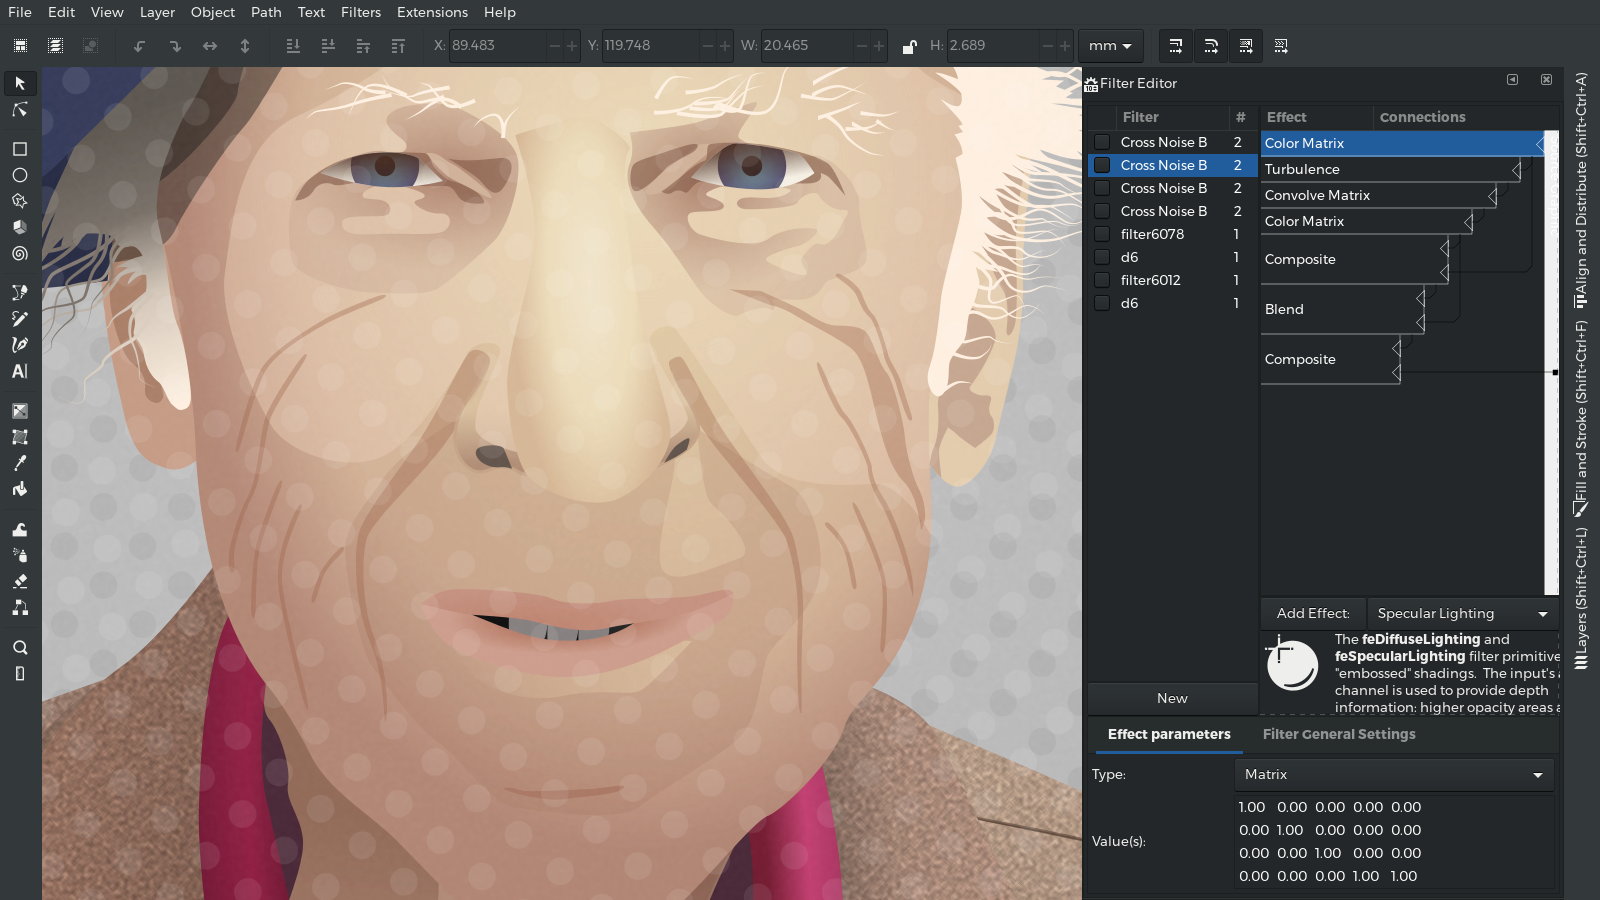 Advanced Vector Graphics – Garry Davies Portrait – Inkscape Screenshot – Fractal Textures – Pop Art Illustration by gfkDSGN